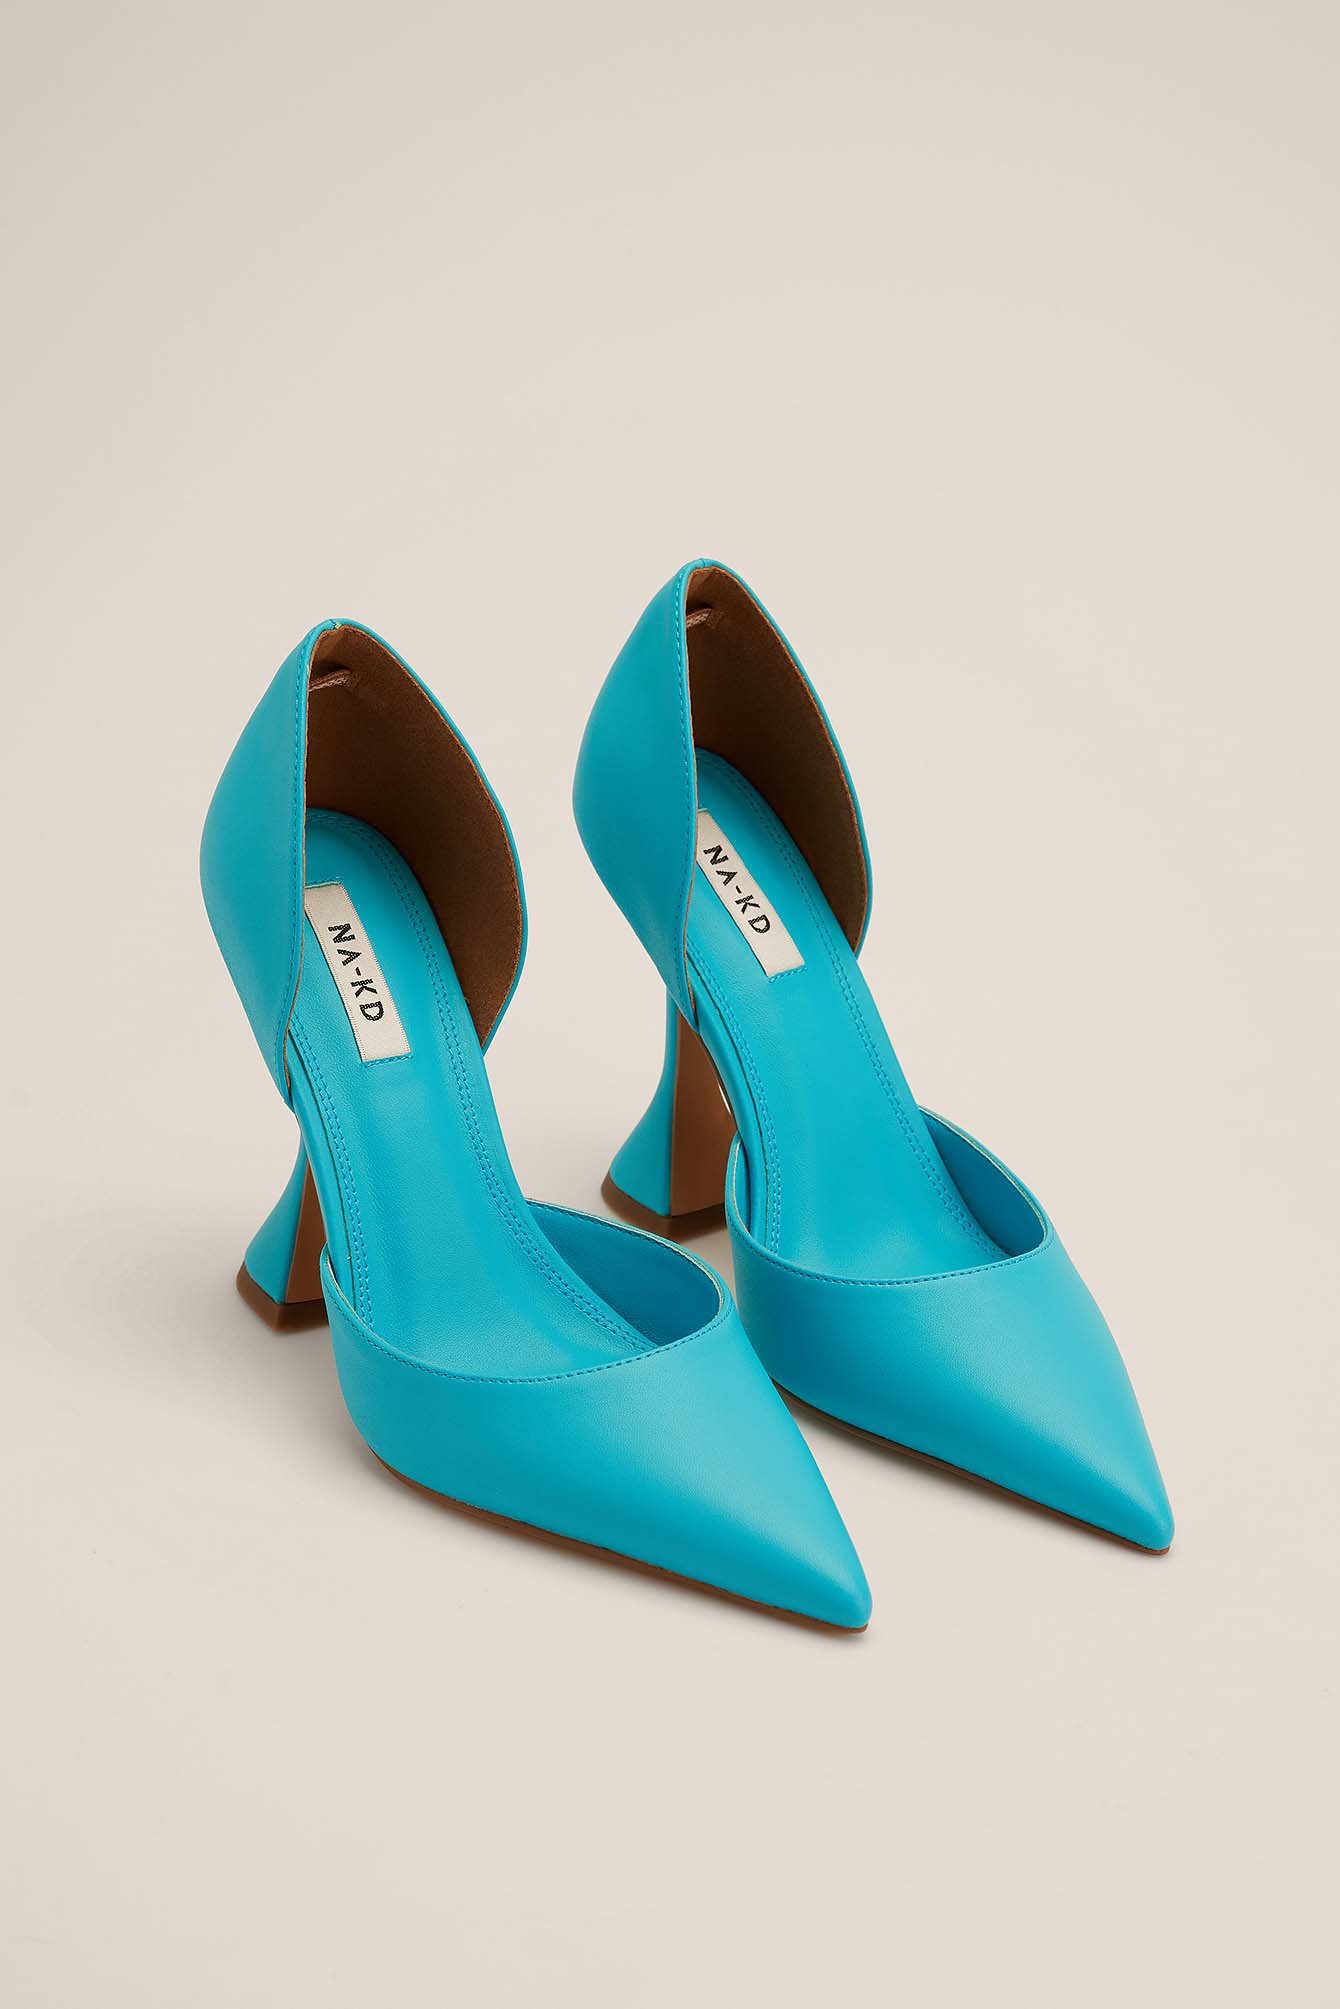 FLAMINGO-808SS Pleaser Sexy Turquoise Glitter Stripper Heels – Pole Dancing  Shoes - KLS Supplies Ltd